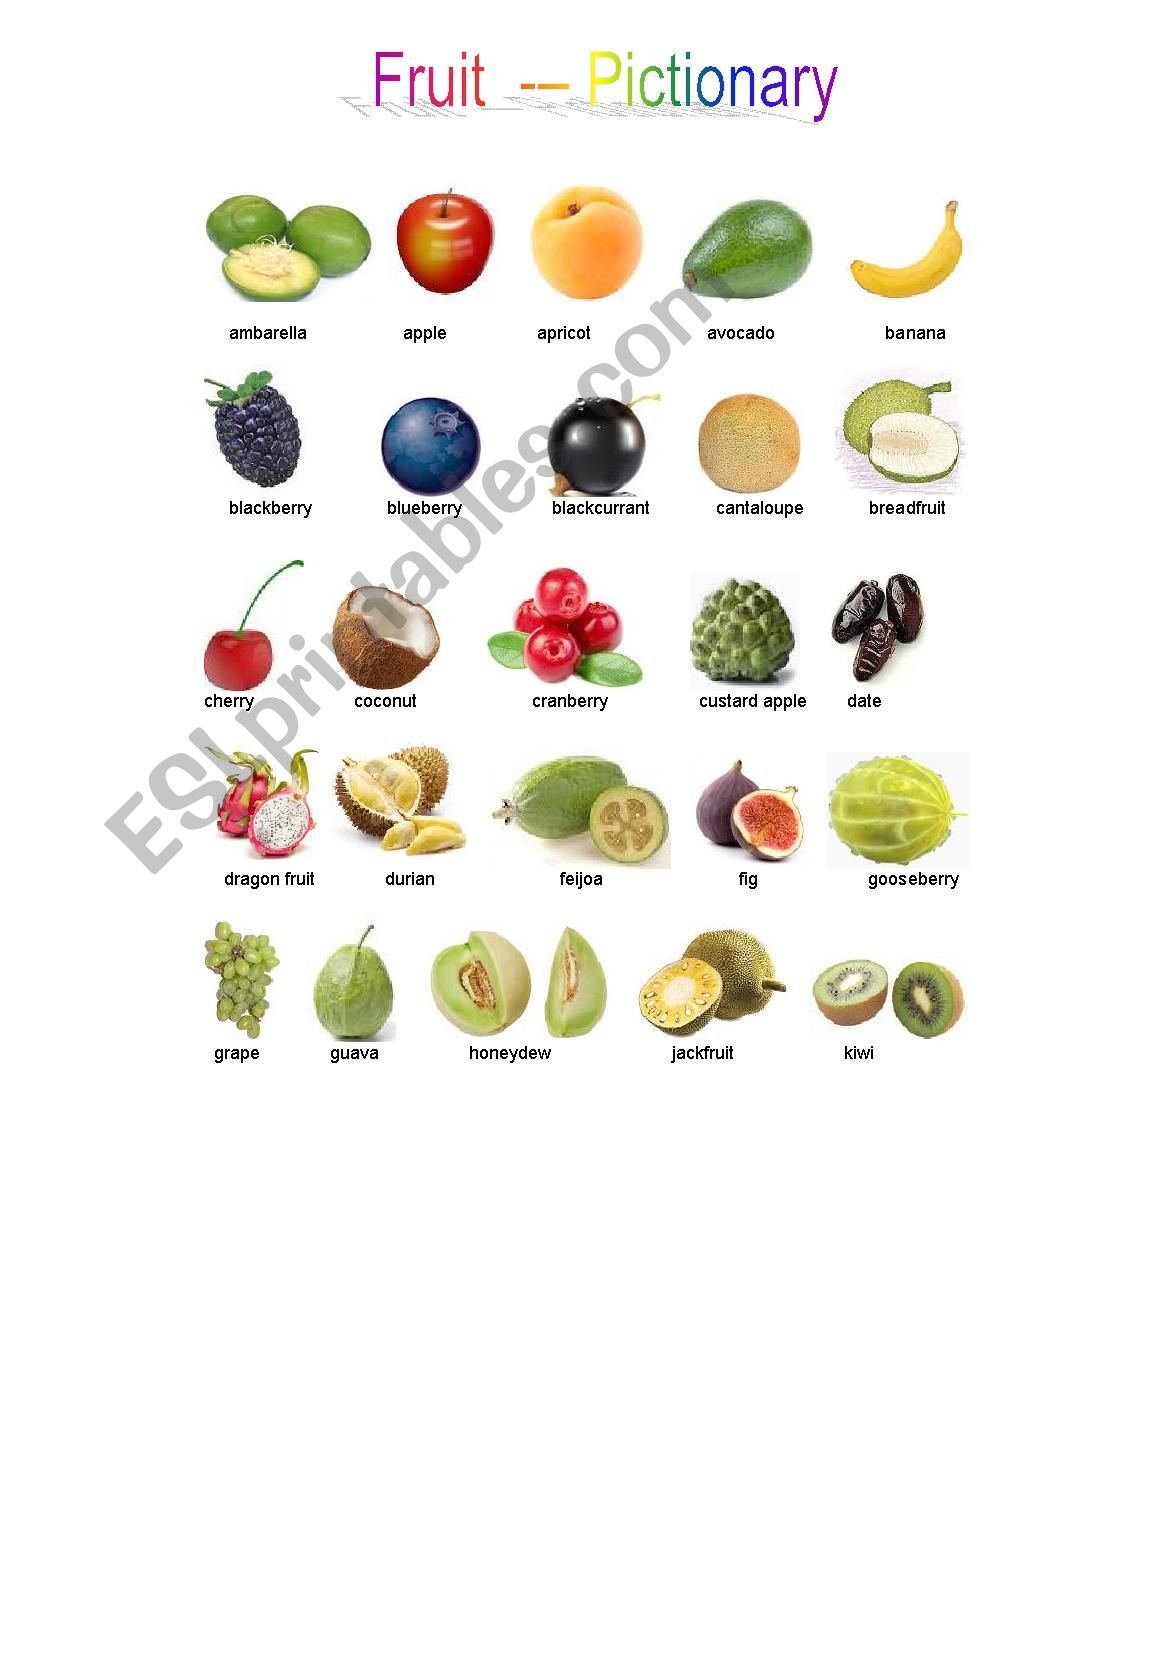 Fruit - Pictionary worksheet